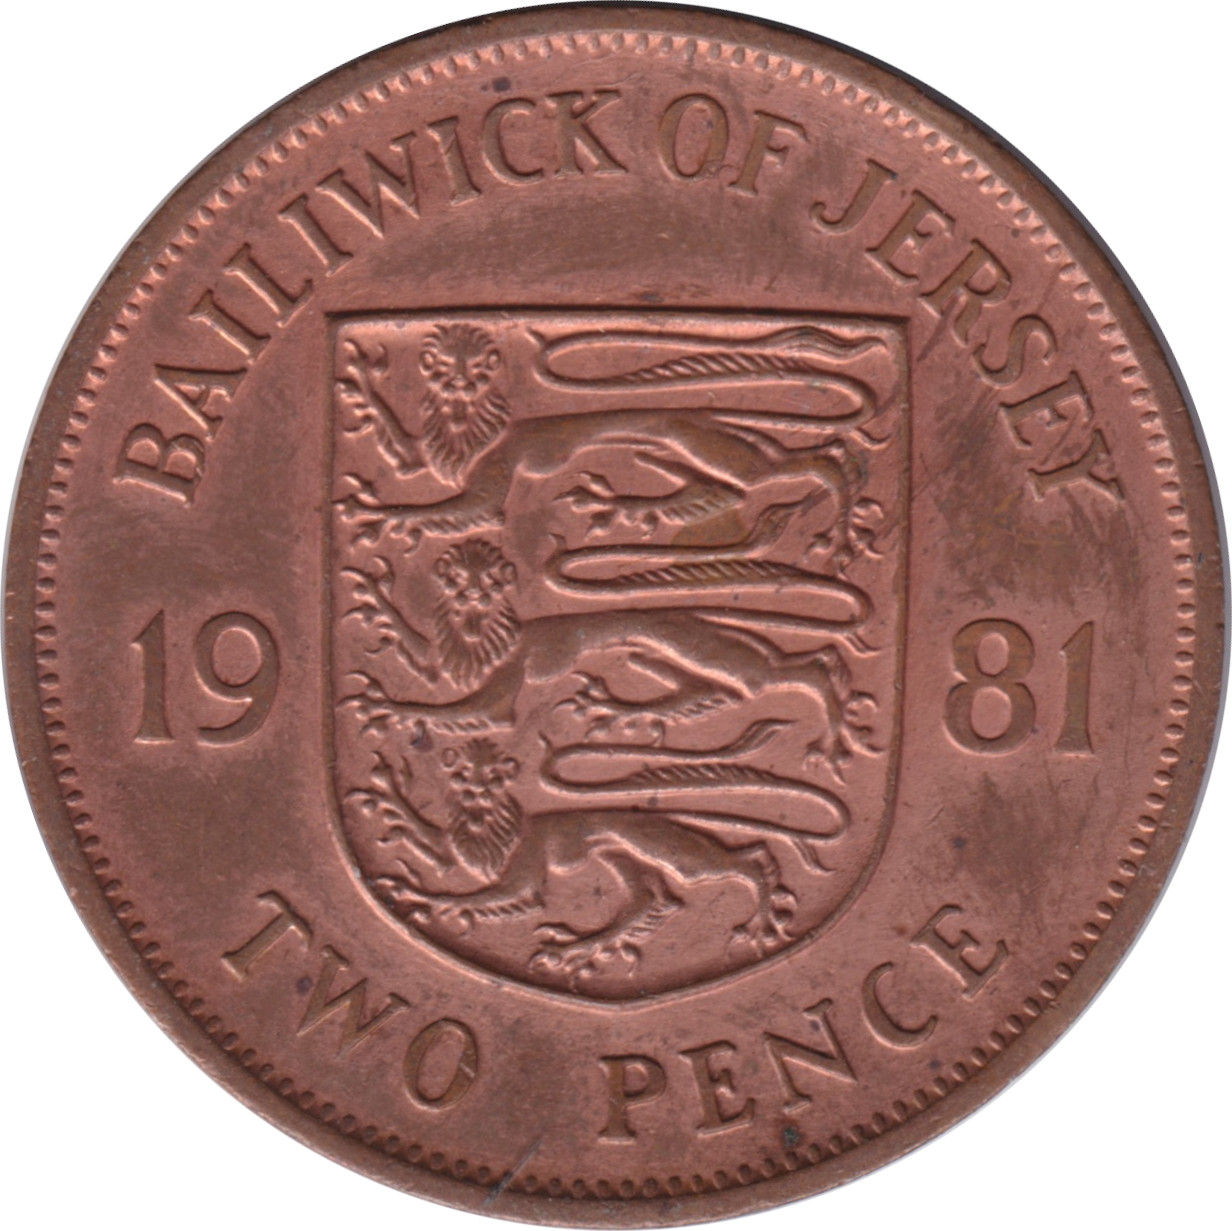 2 pence - Elizabeth II - Buste jeune - Two Pence